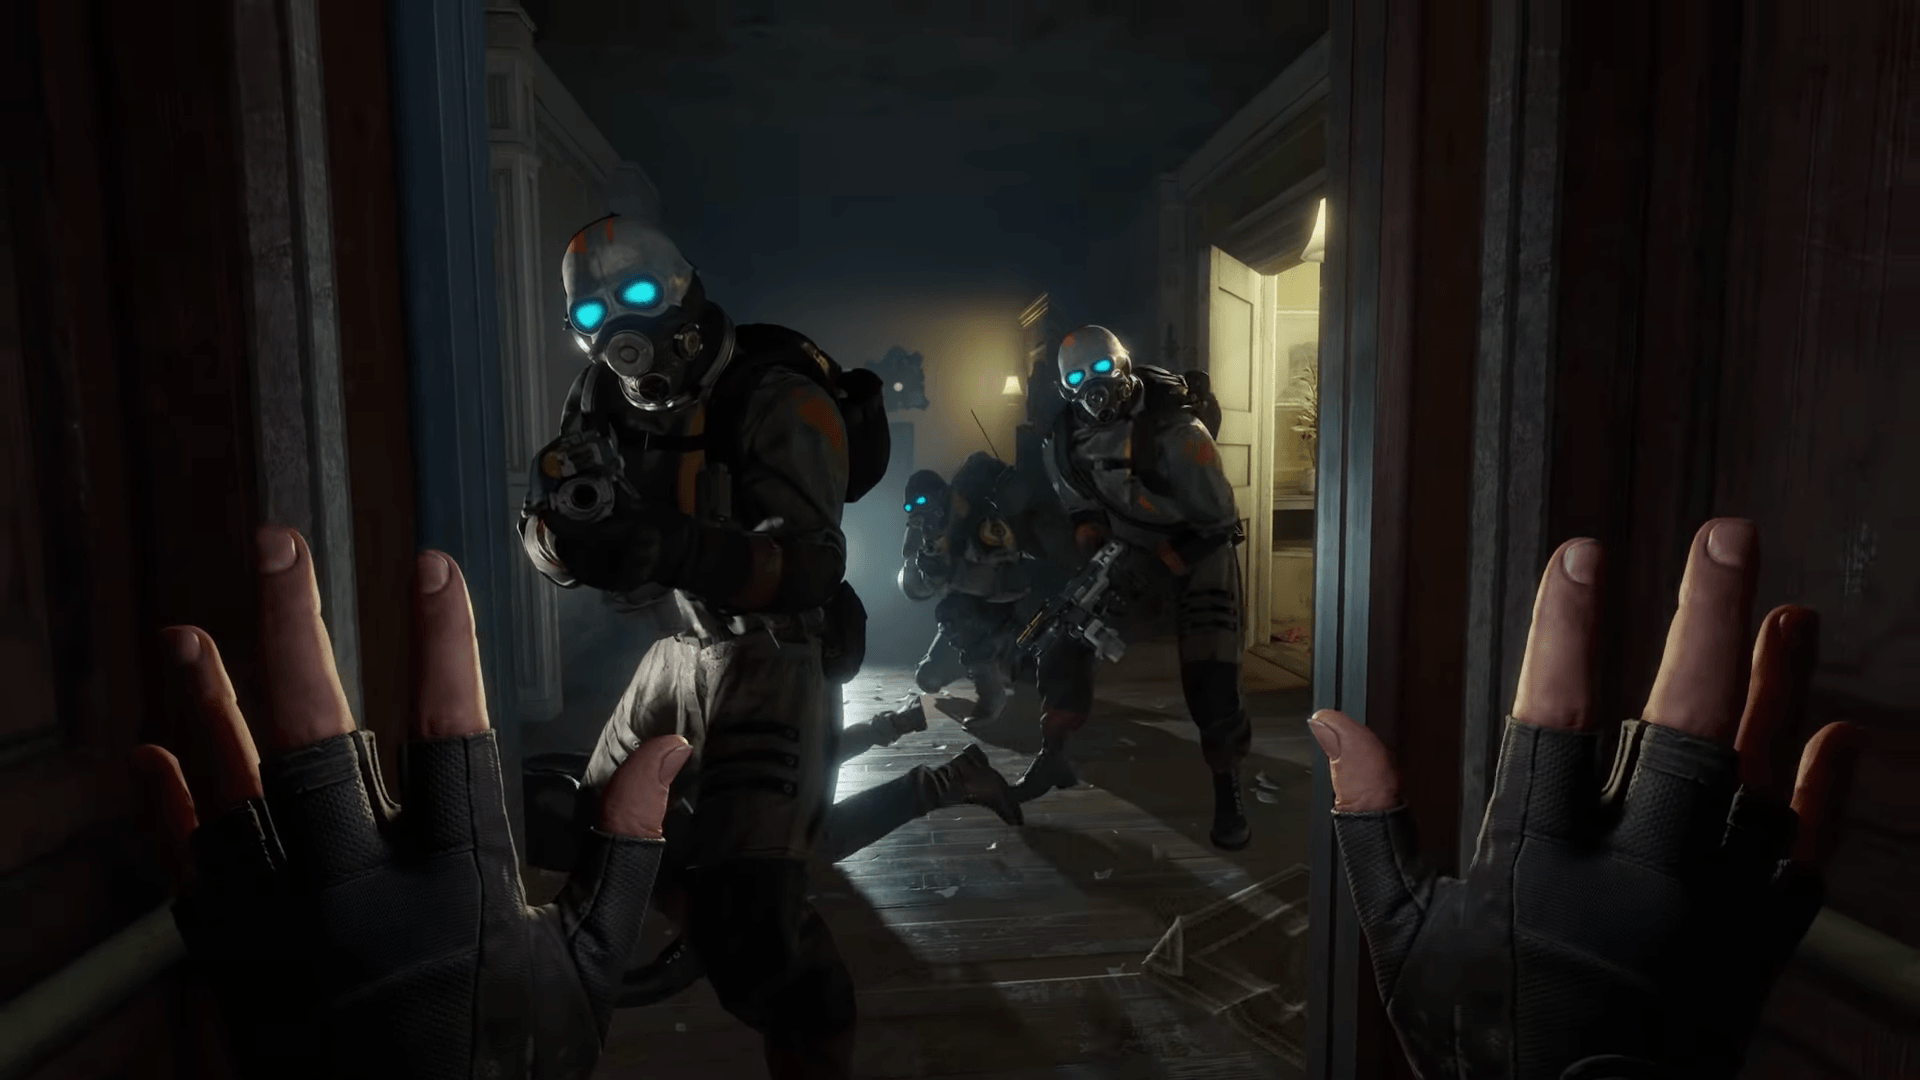 Valve reveals VR game 'Half-Life: Alyx' is on its way